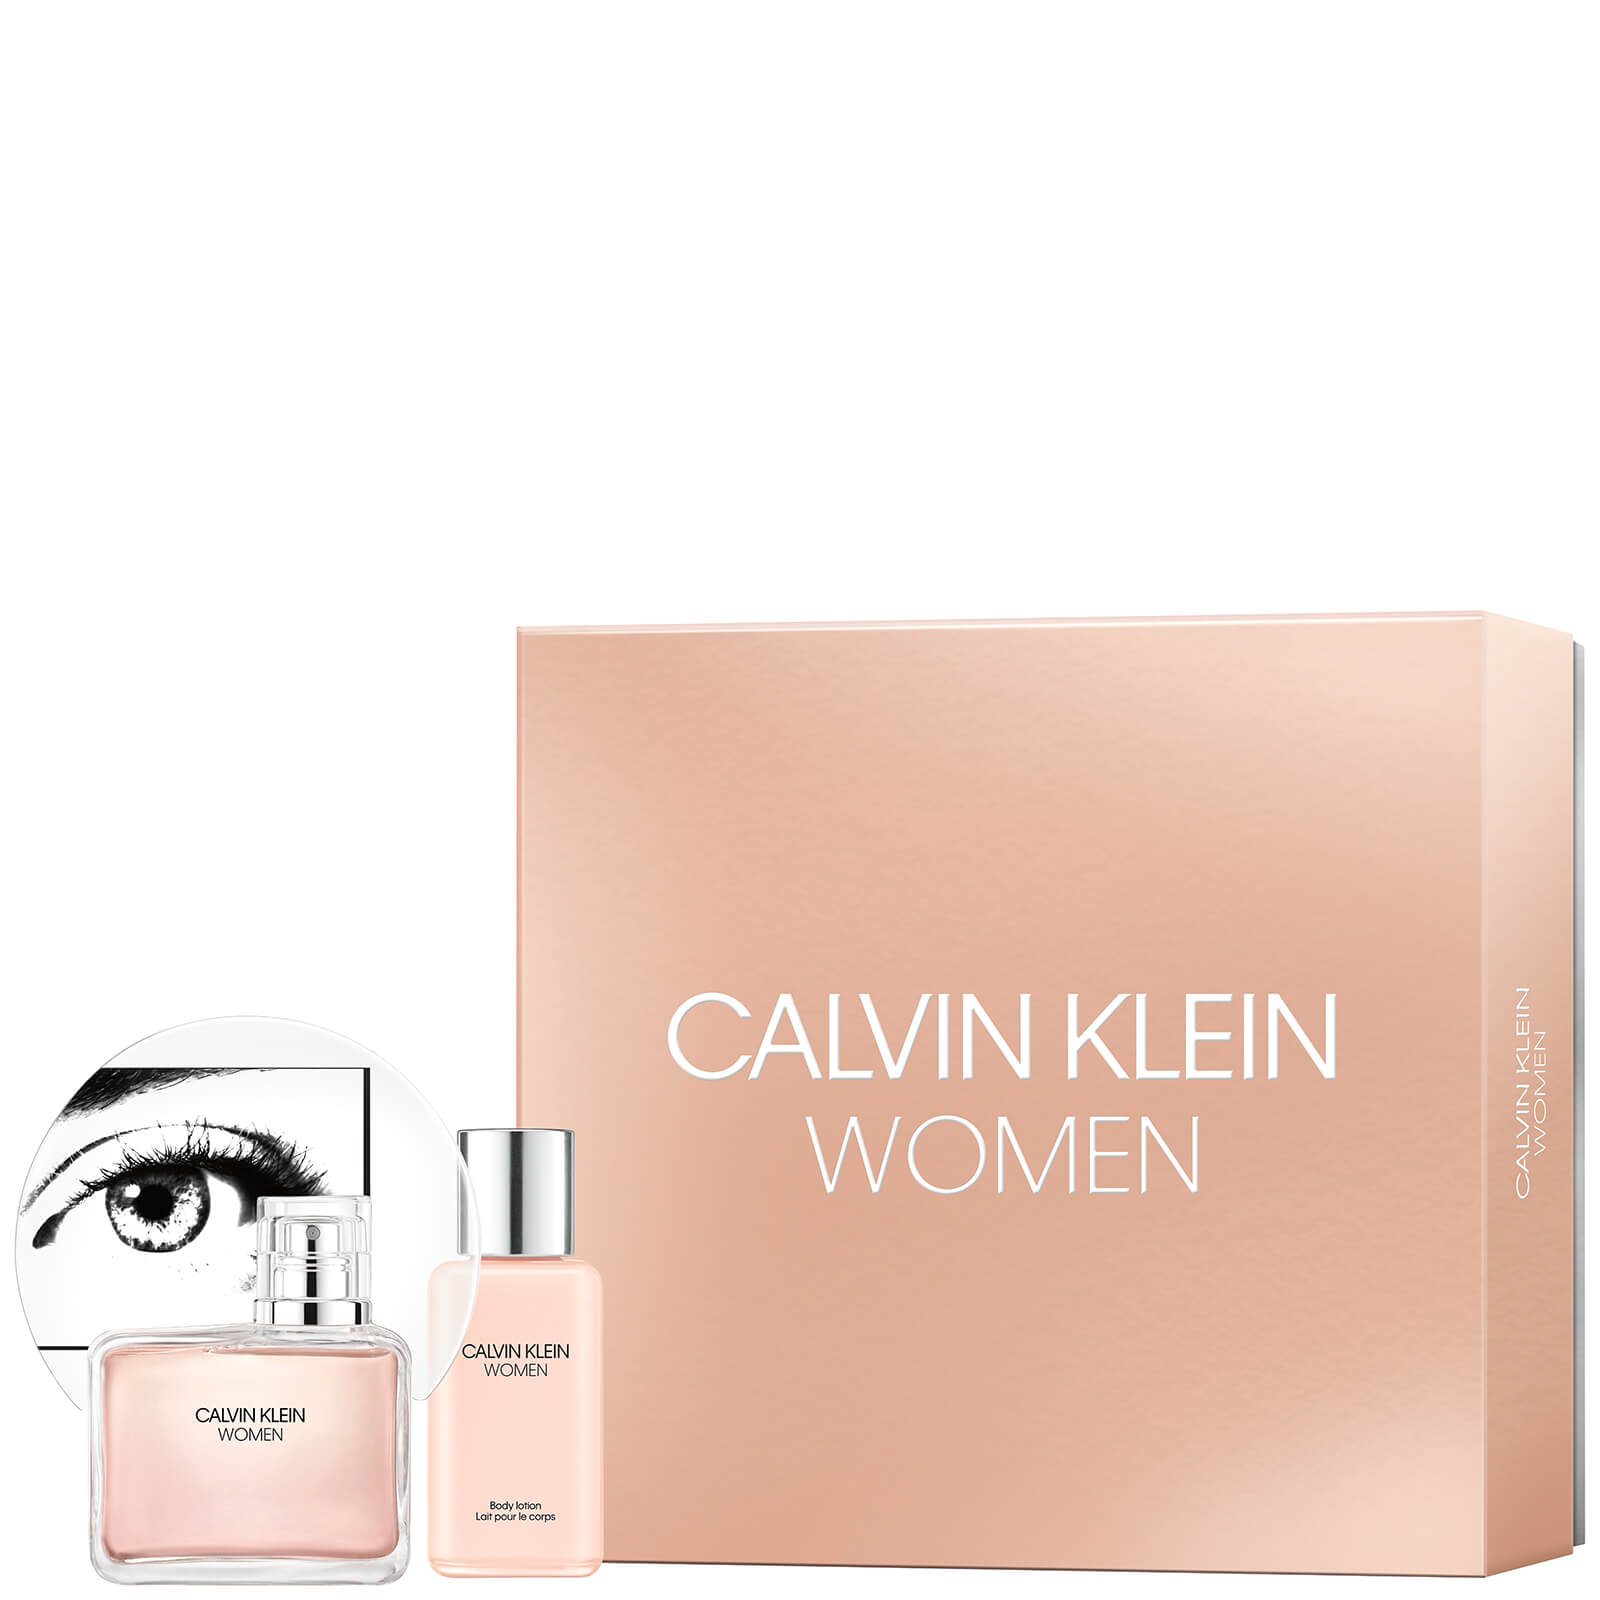 Set navideño de Eau de Parfum Women de Calvin Klein 100 ml